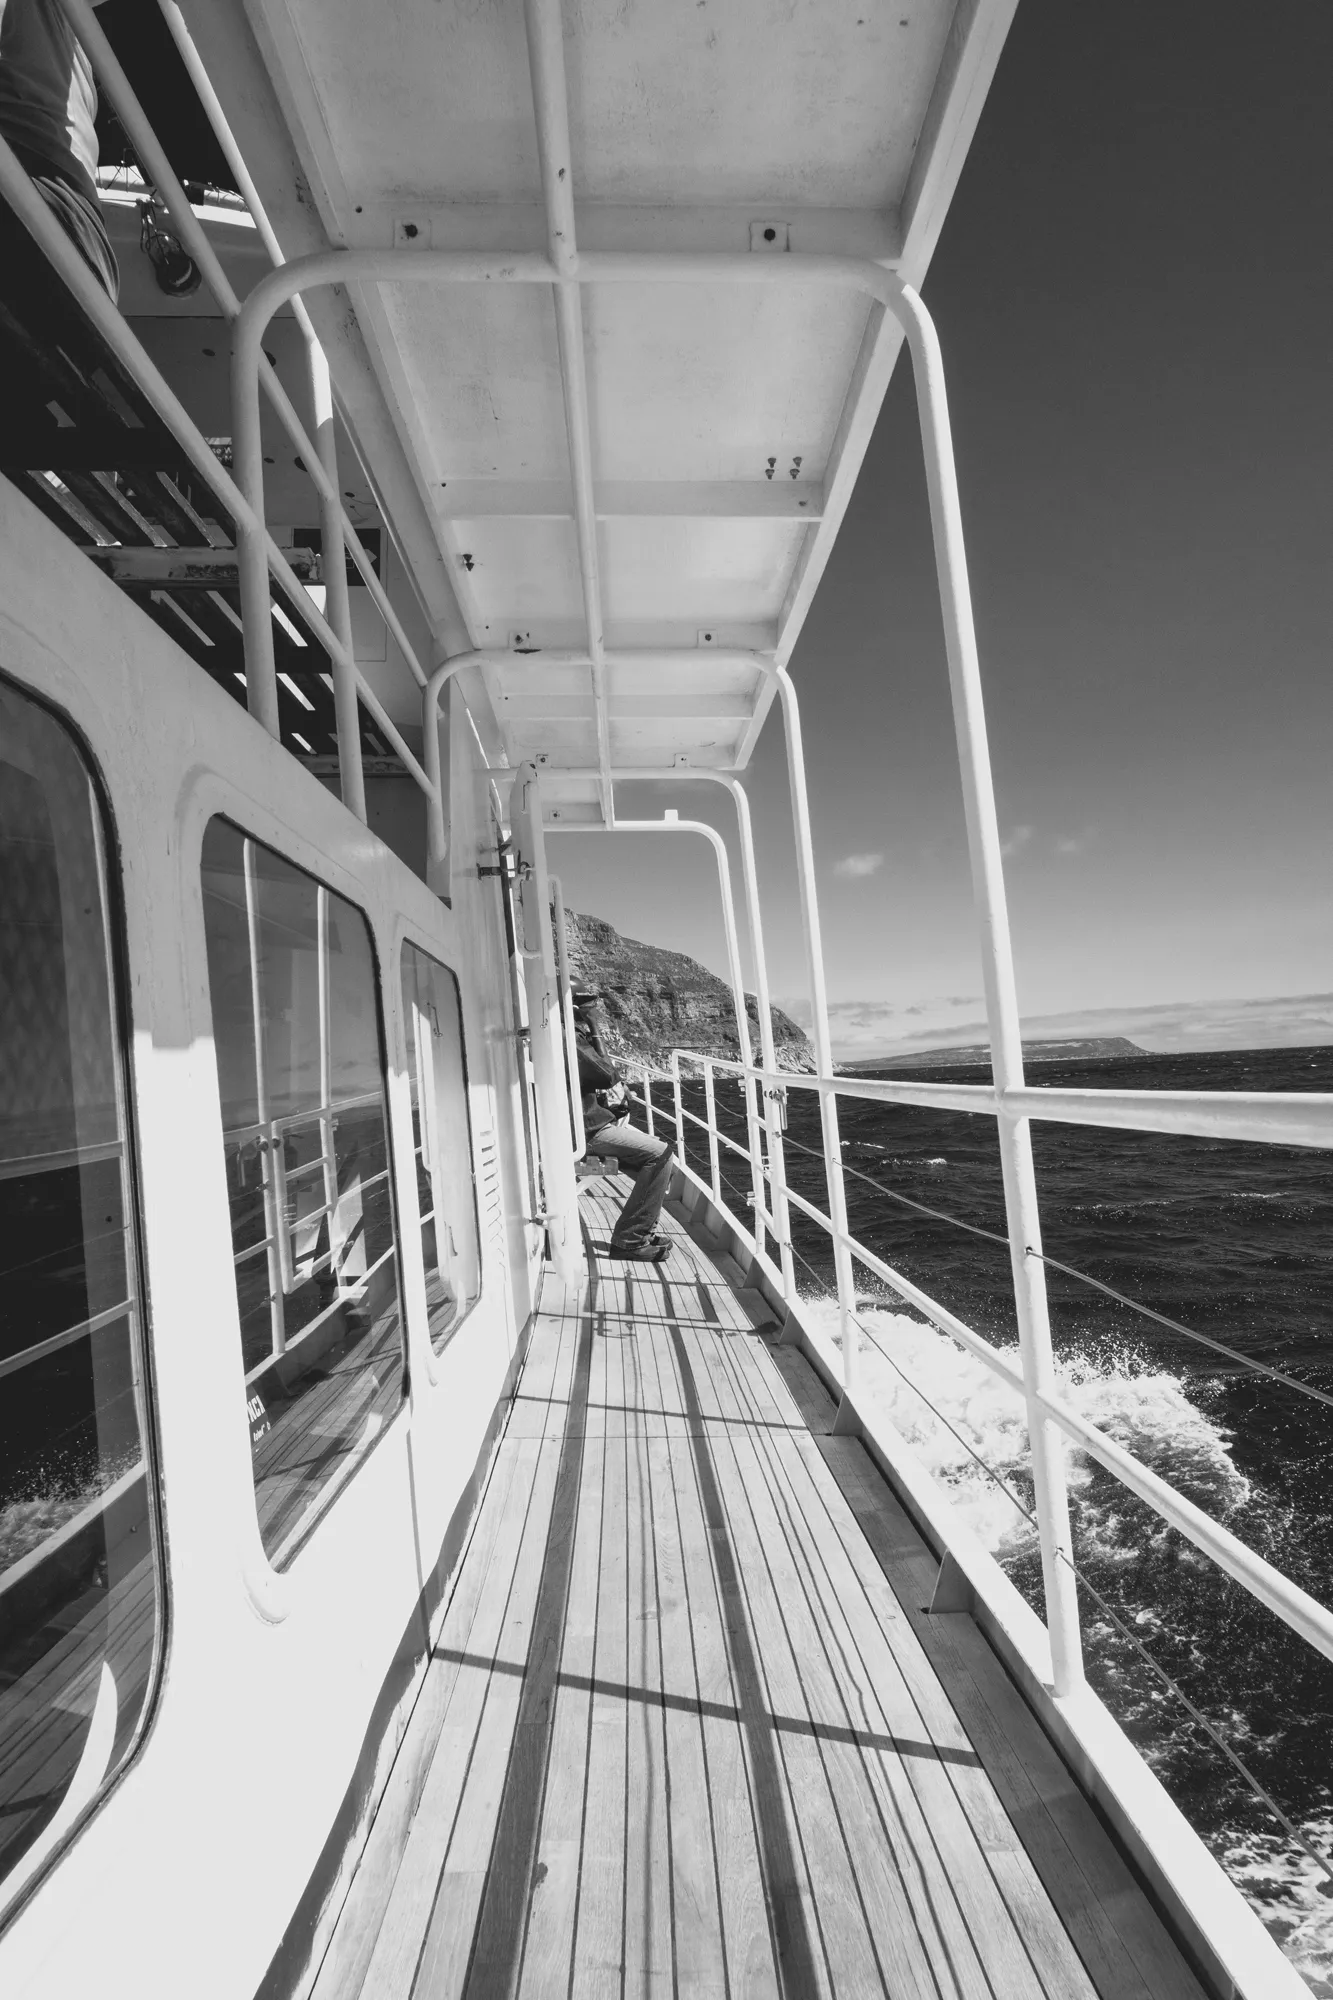 2022-02-13 - Cape Town - Walkway on boat beside the ocean